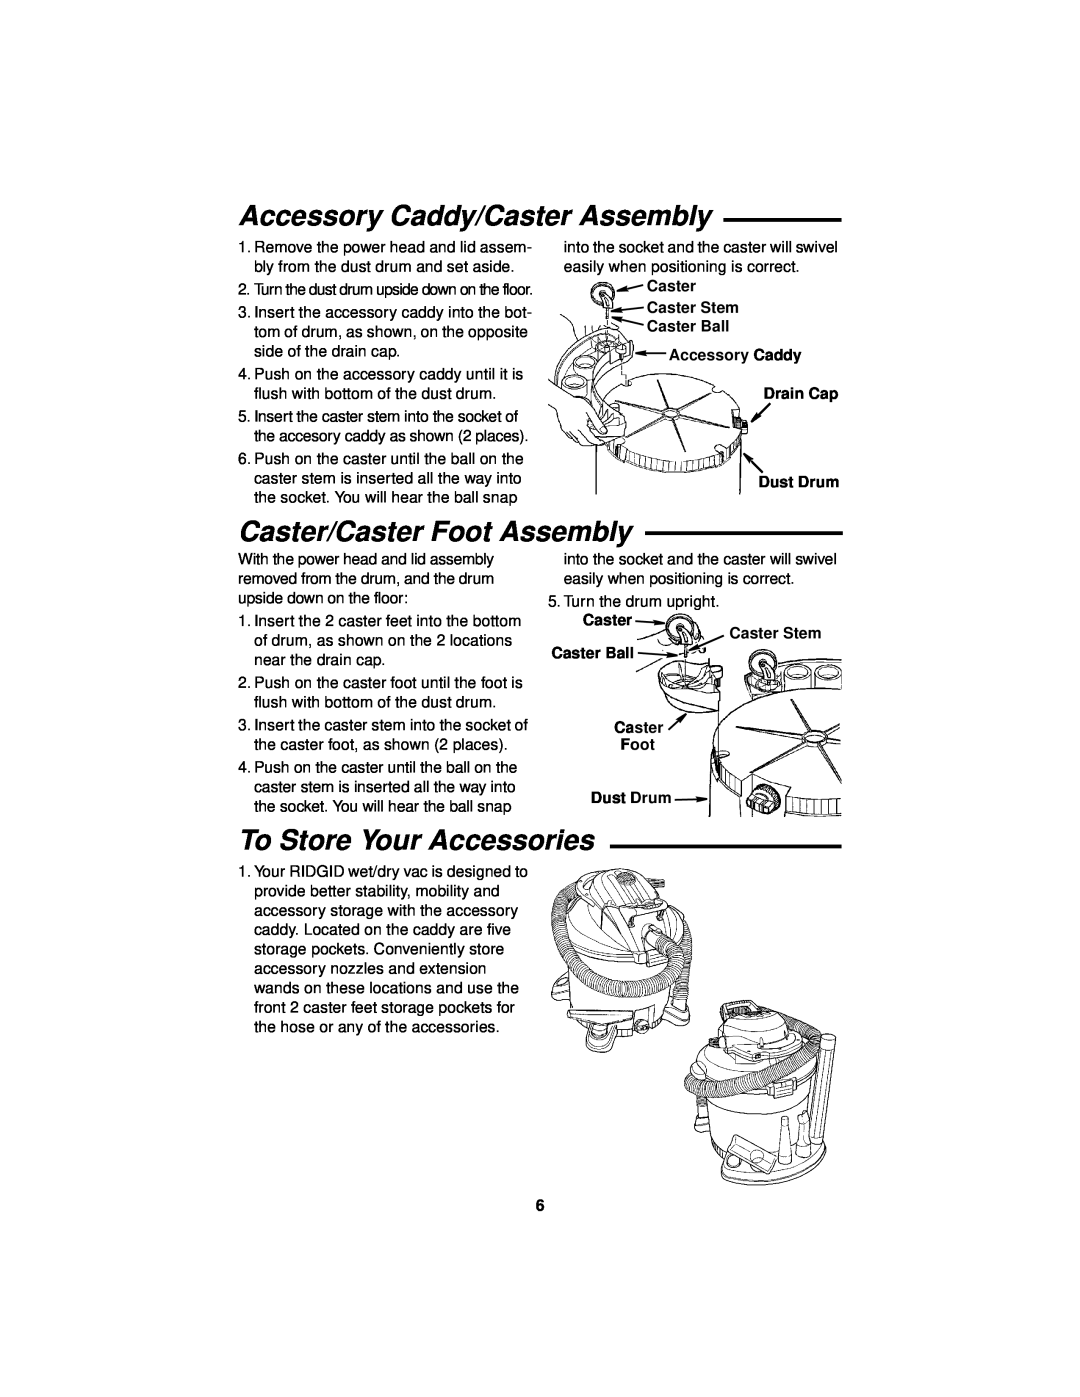 RIDGID WD1665 manual Accessory Caddy/Caster Assembly, Caster/Caster Foot Assembly, To Store Your Accessories 